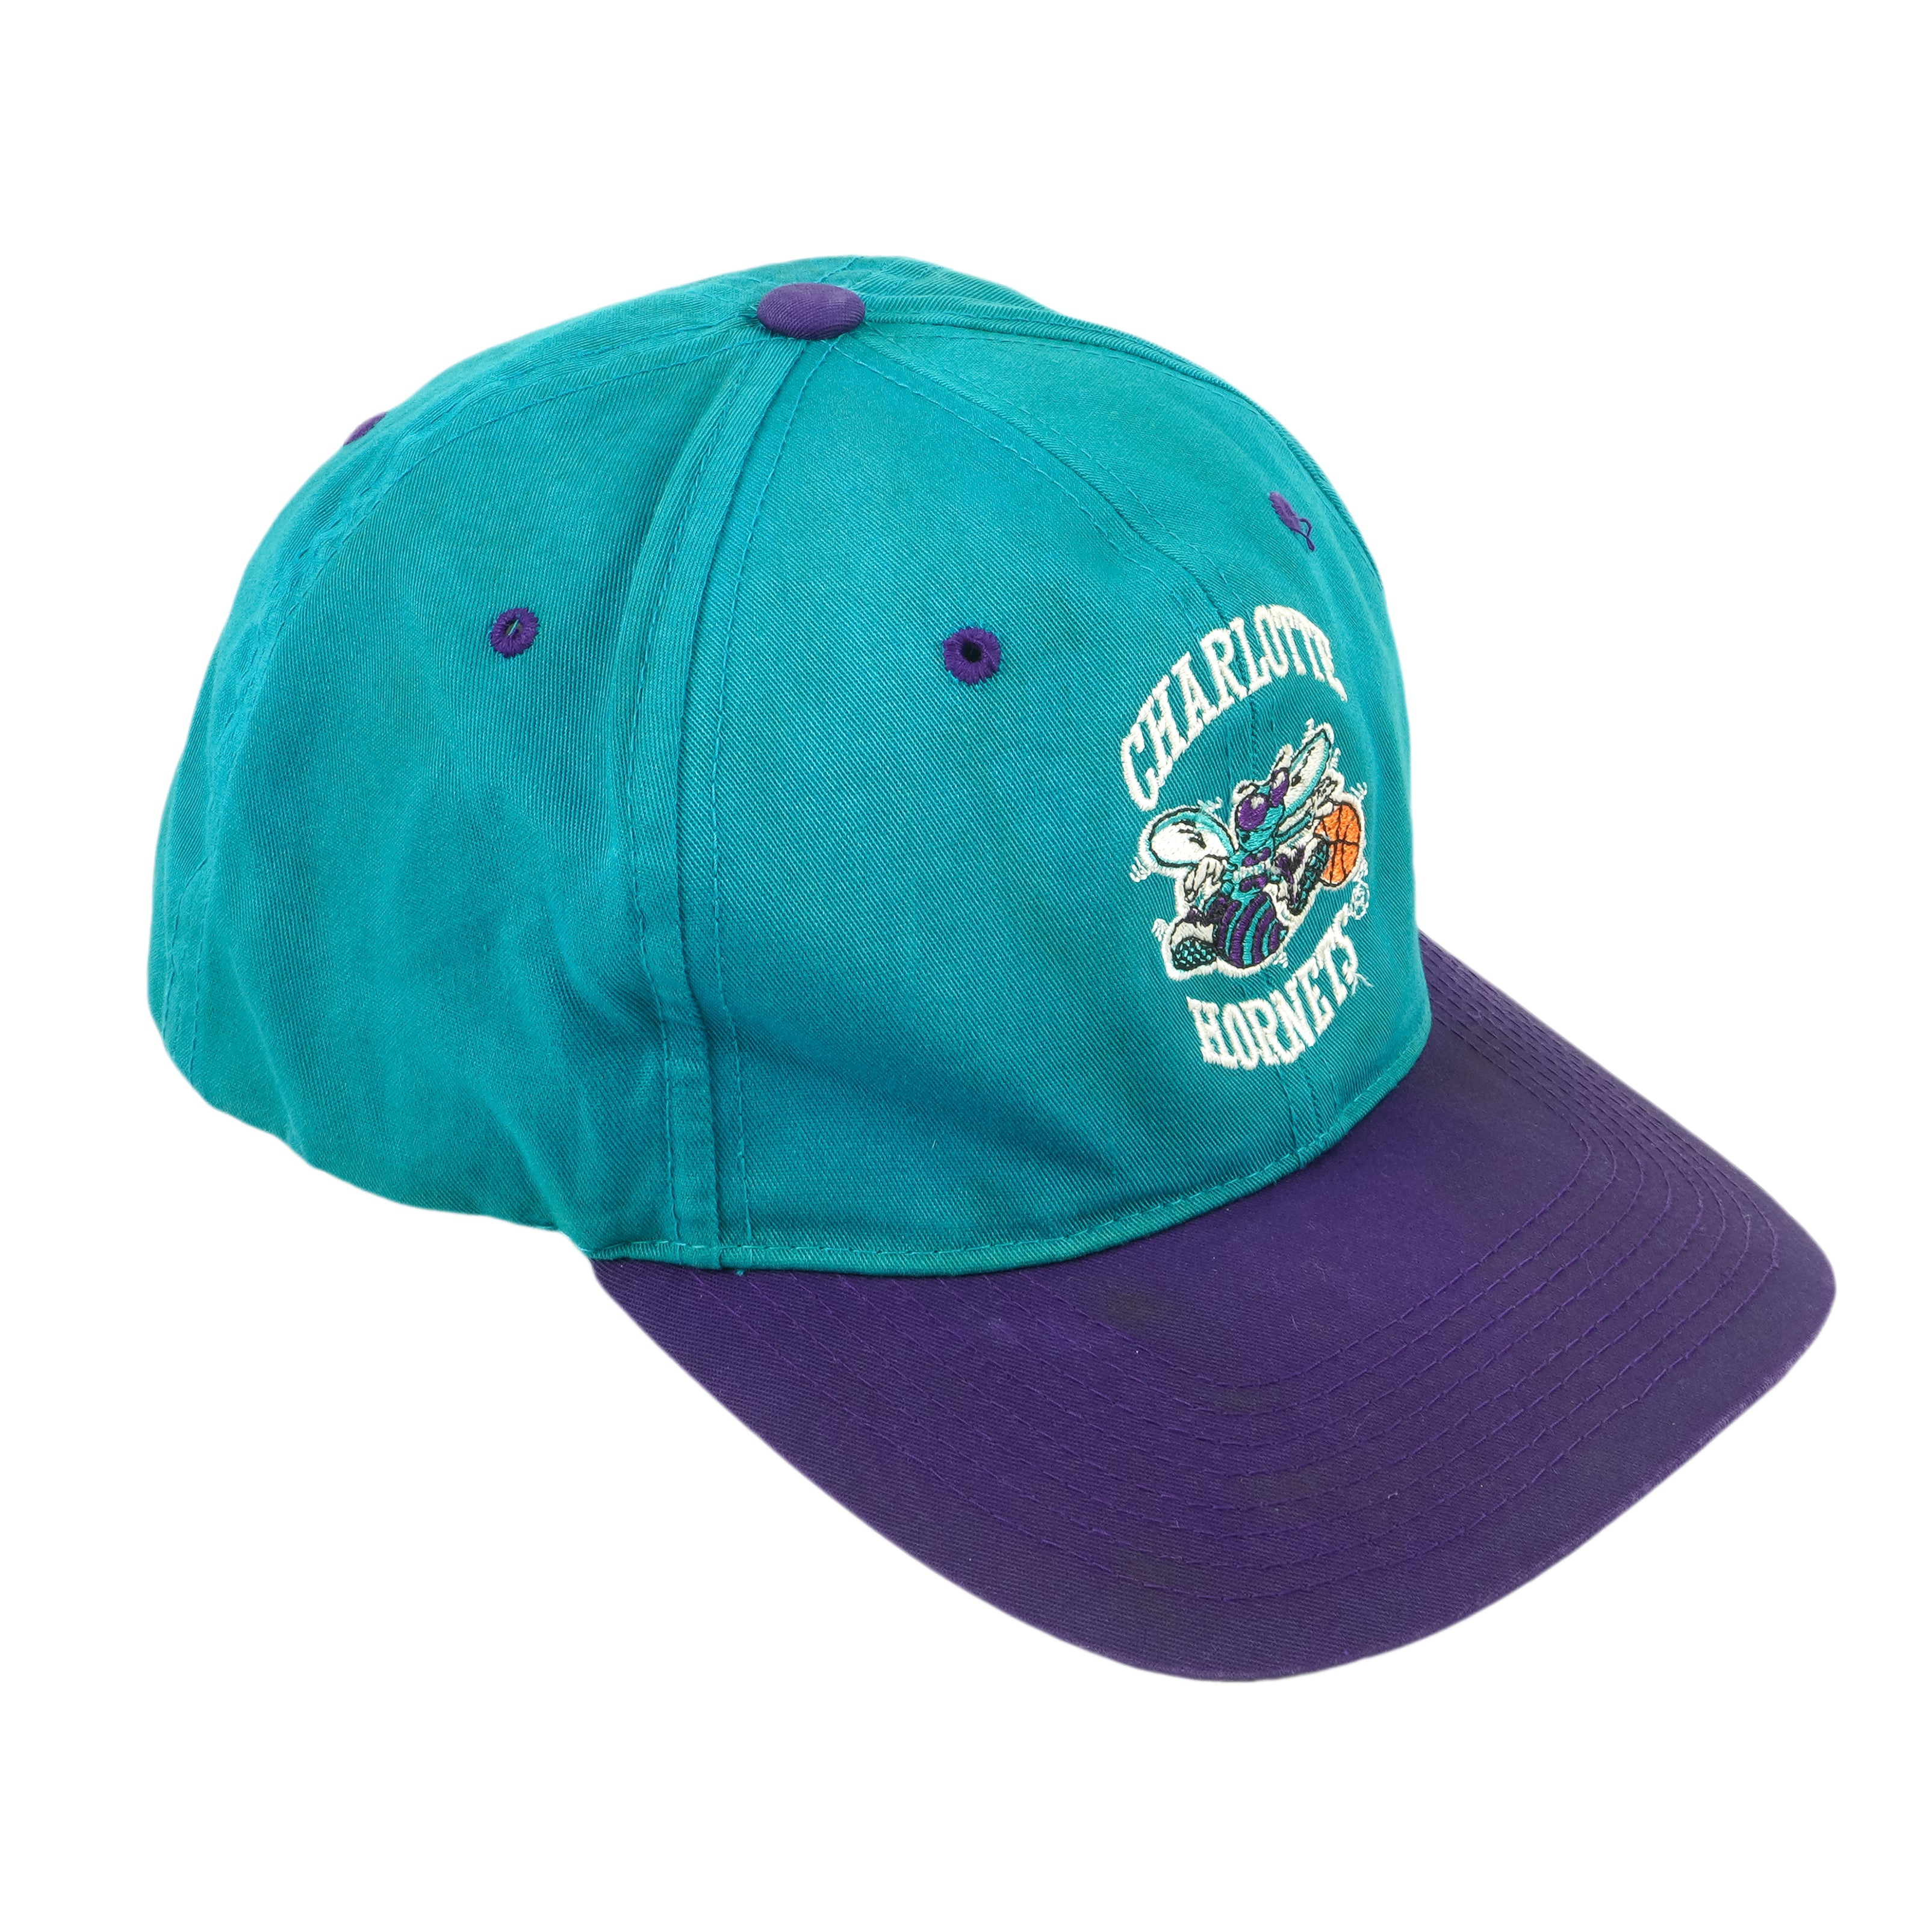 Chicago New Leader Splash Snapback Hat 